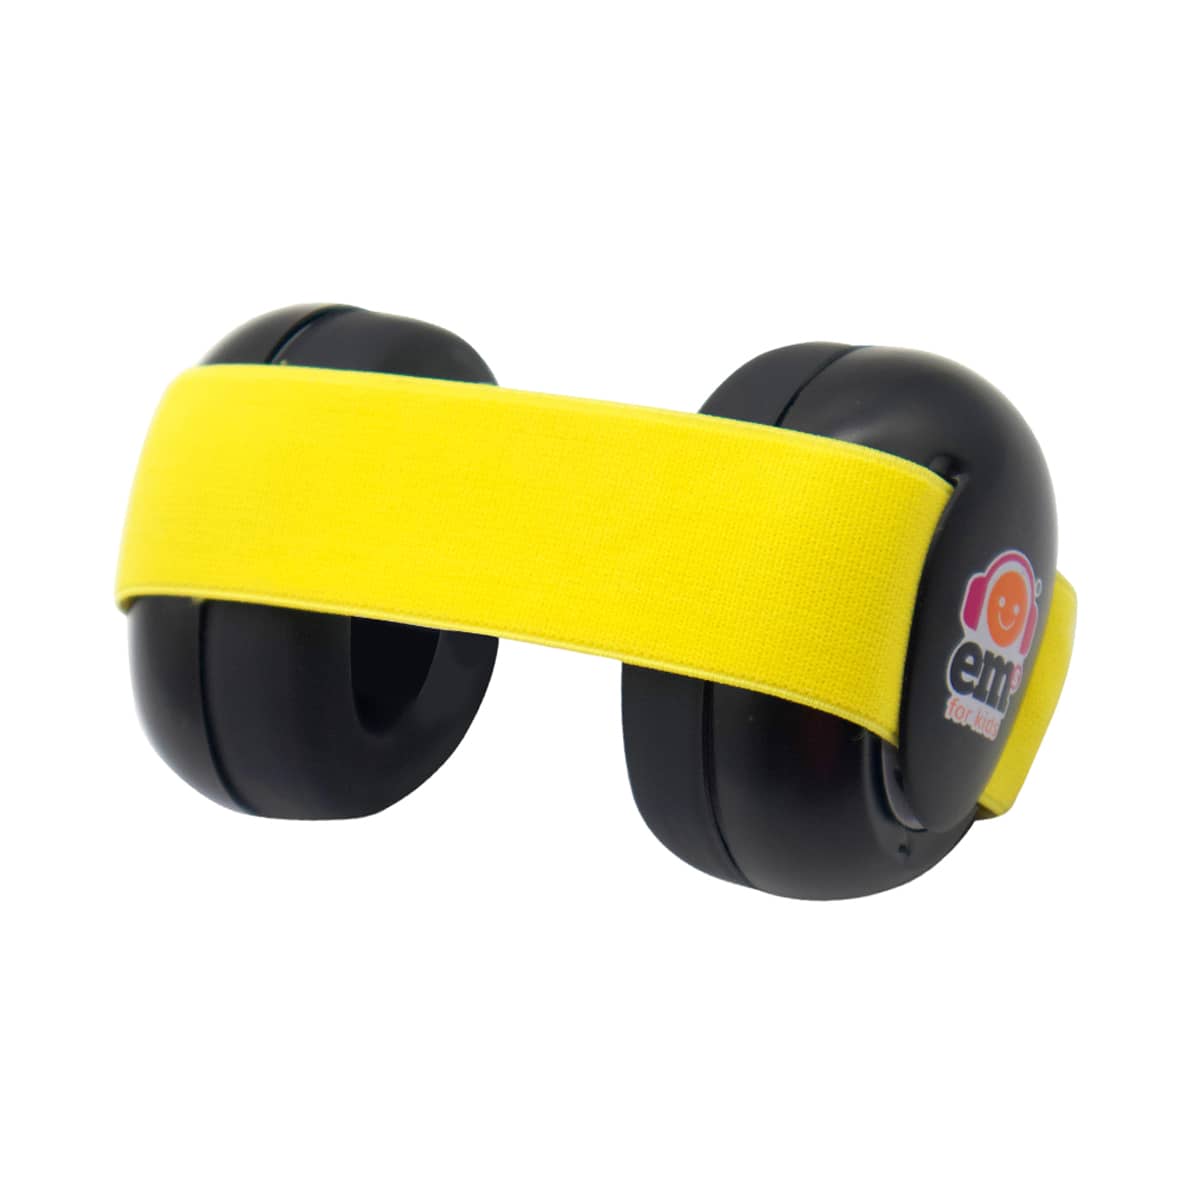 Ems for Kids Baby Earmuffs - Black with Yellow Headband